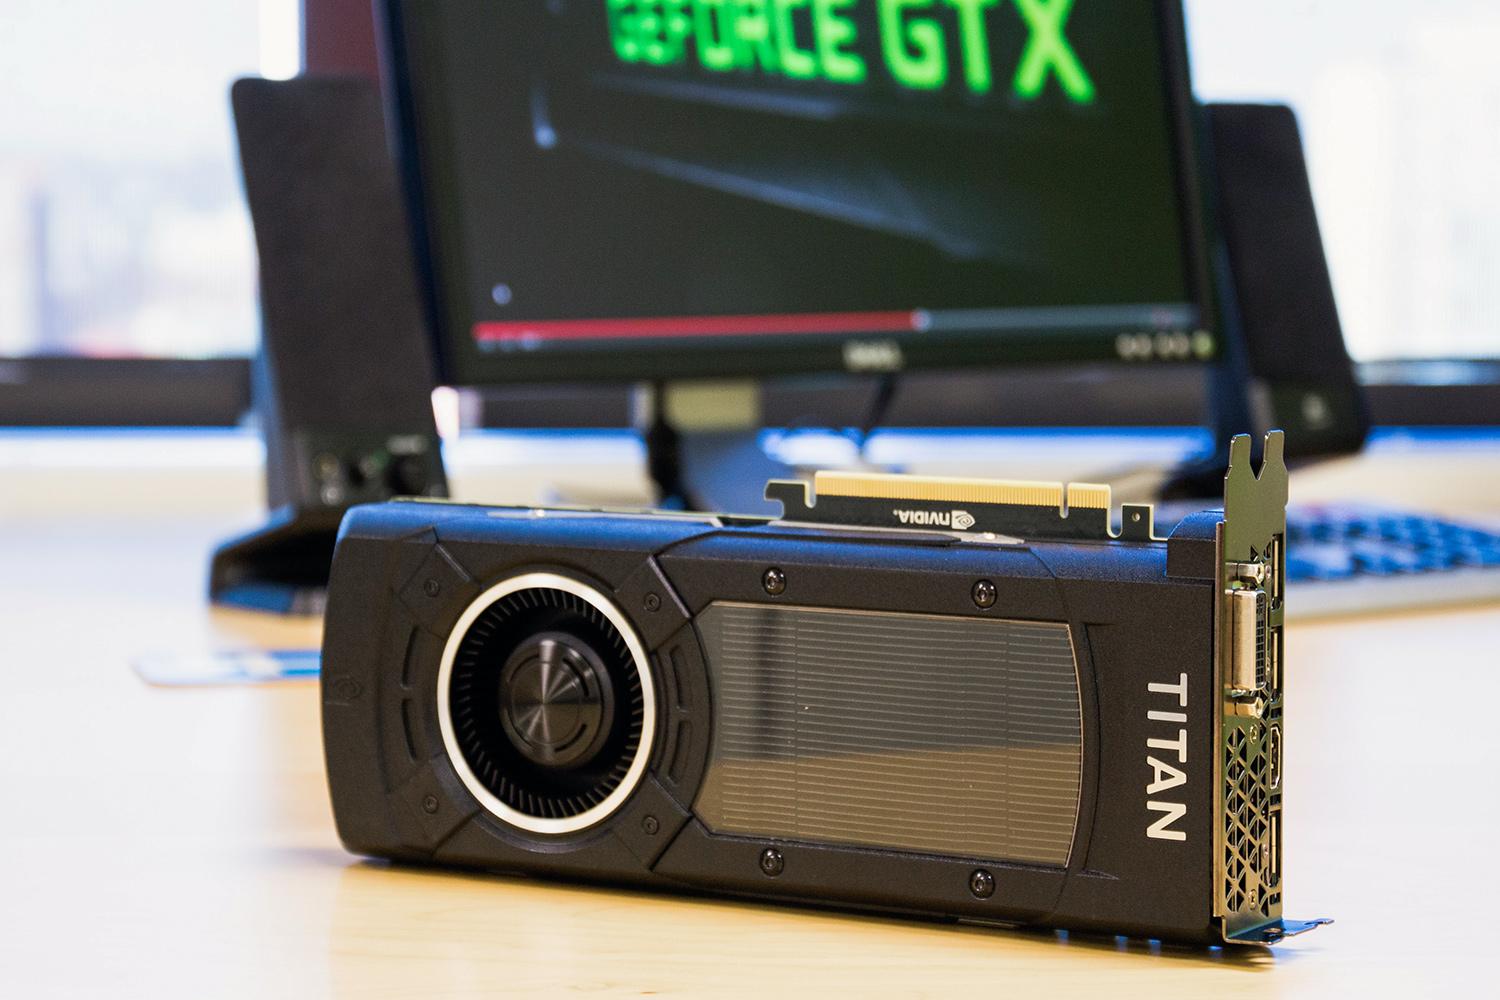 Nvidia GeForce GTX Titan X review | Graphics Card | Digital Trends